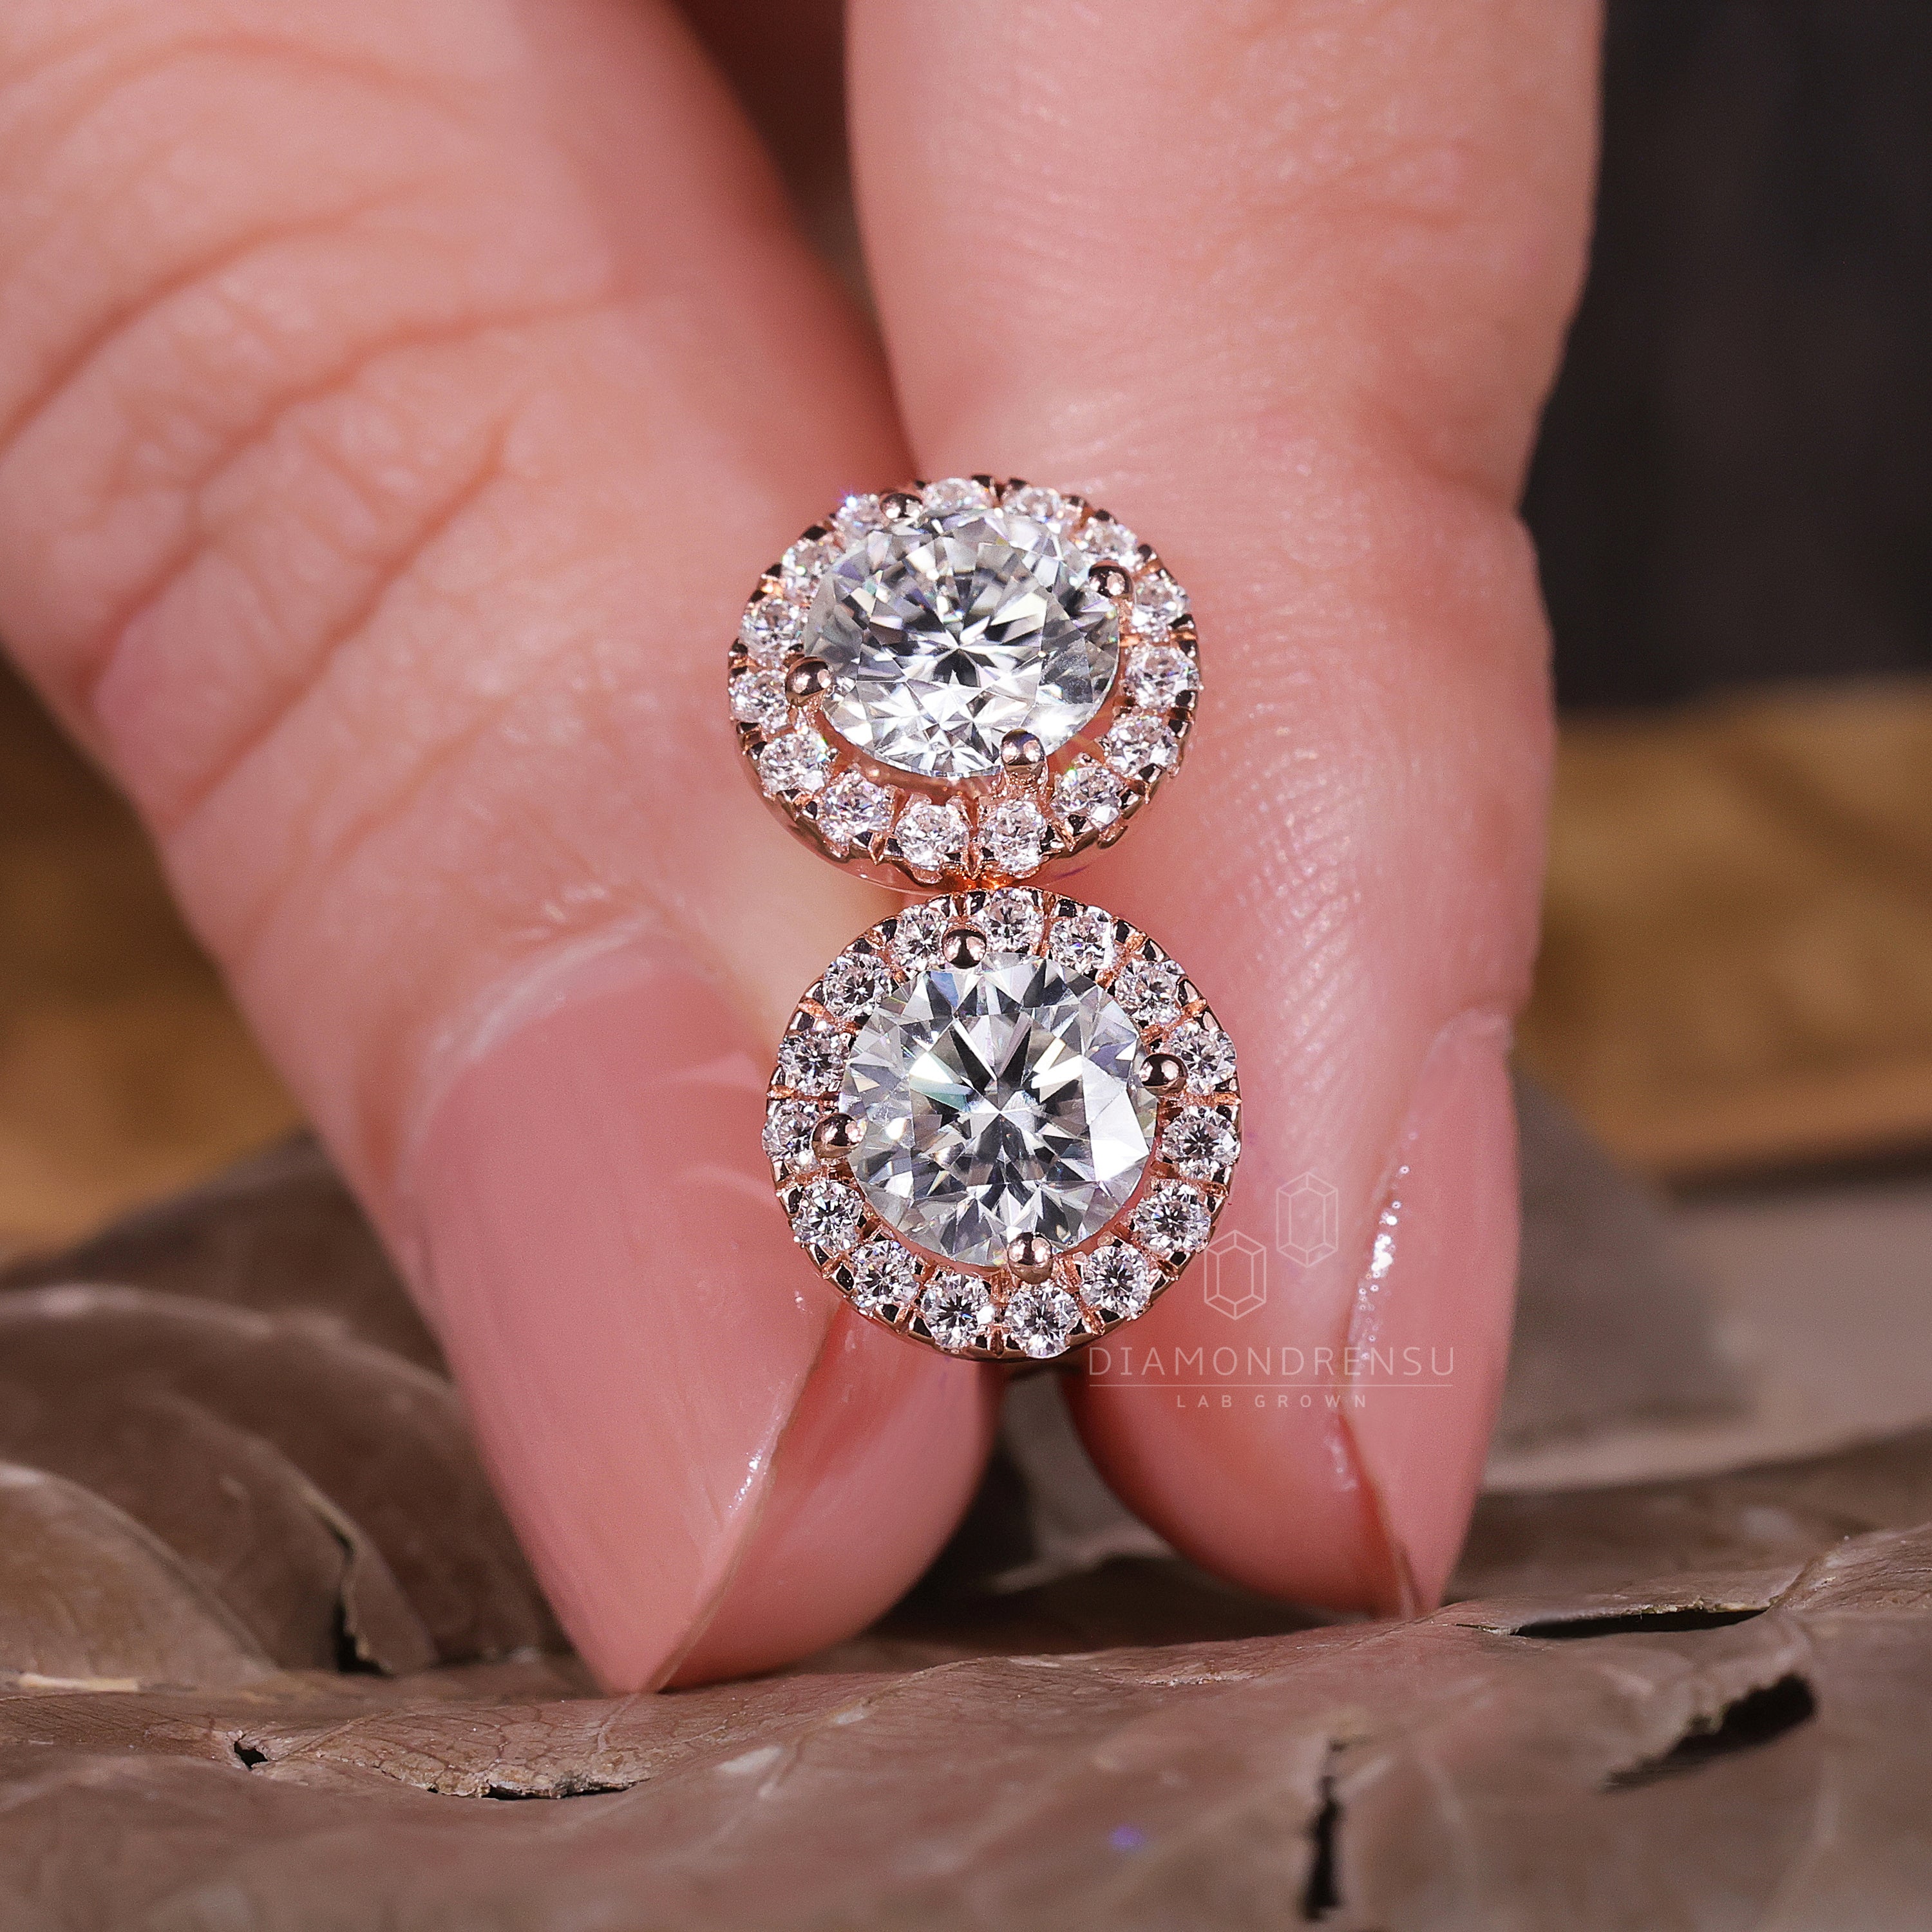 lab created diamond earrings - diamondrensu